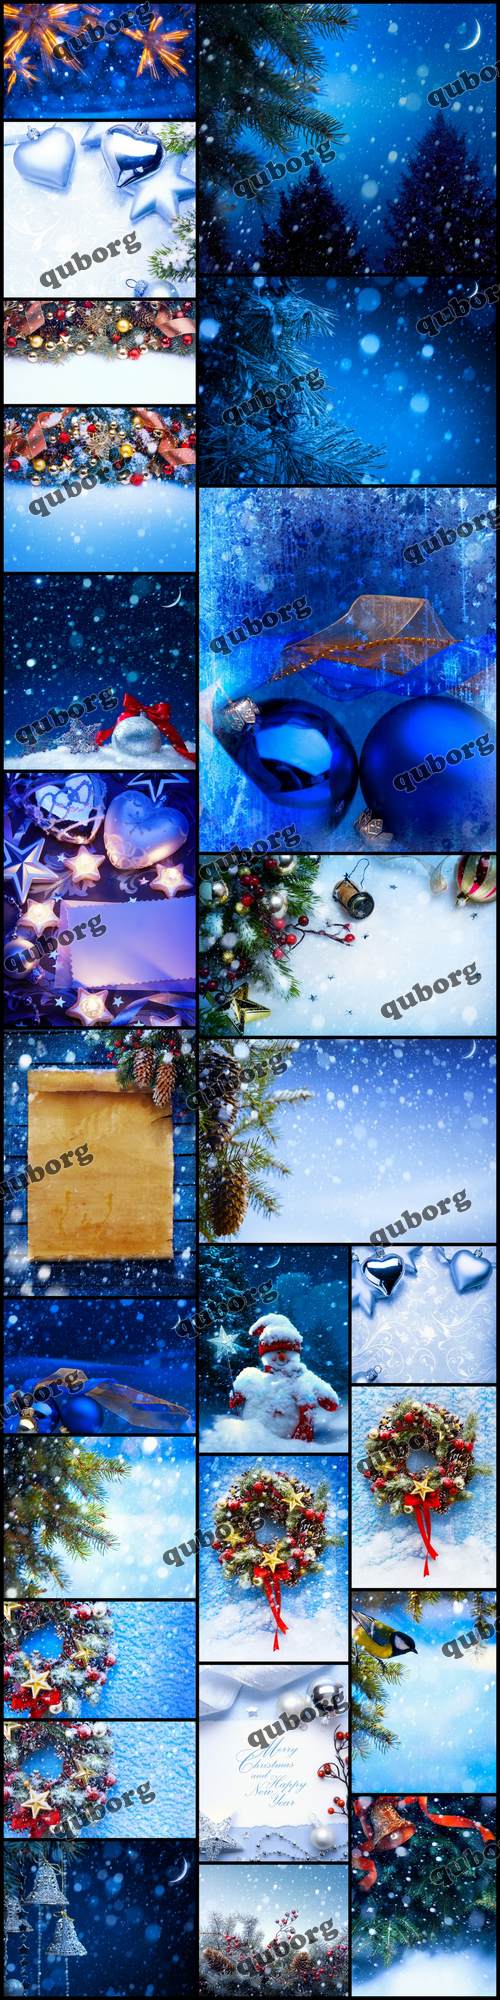 Stock Photos - Blue Christmas Backgrounds